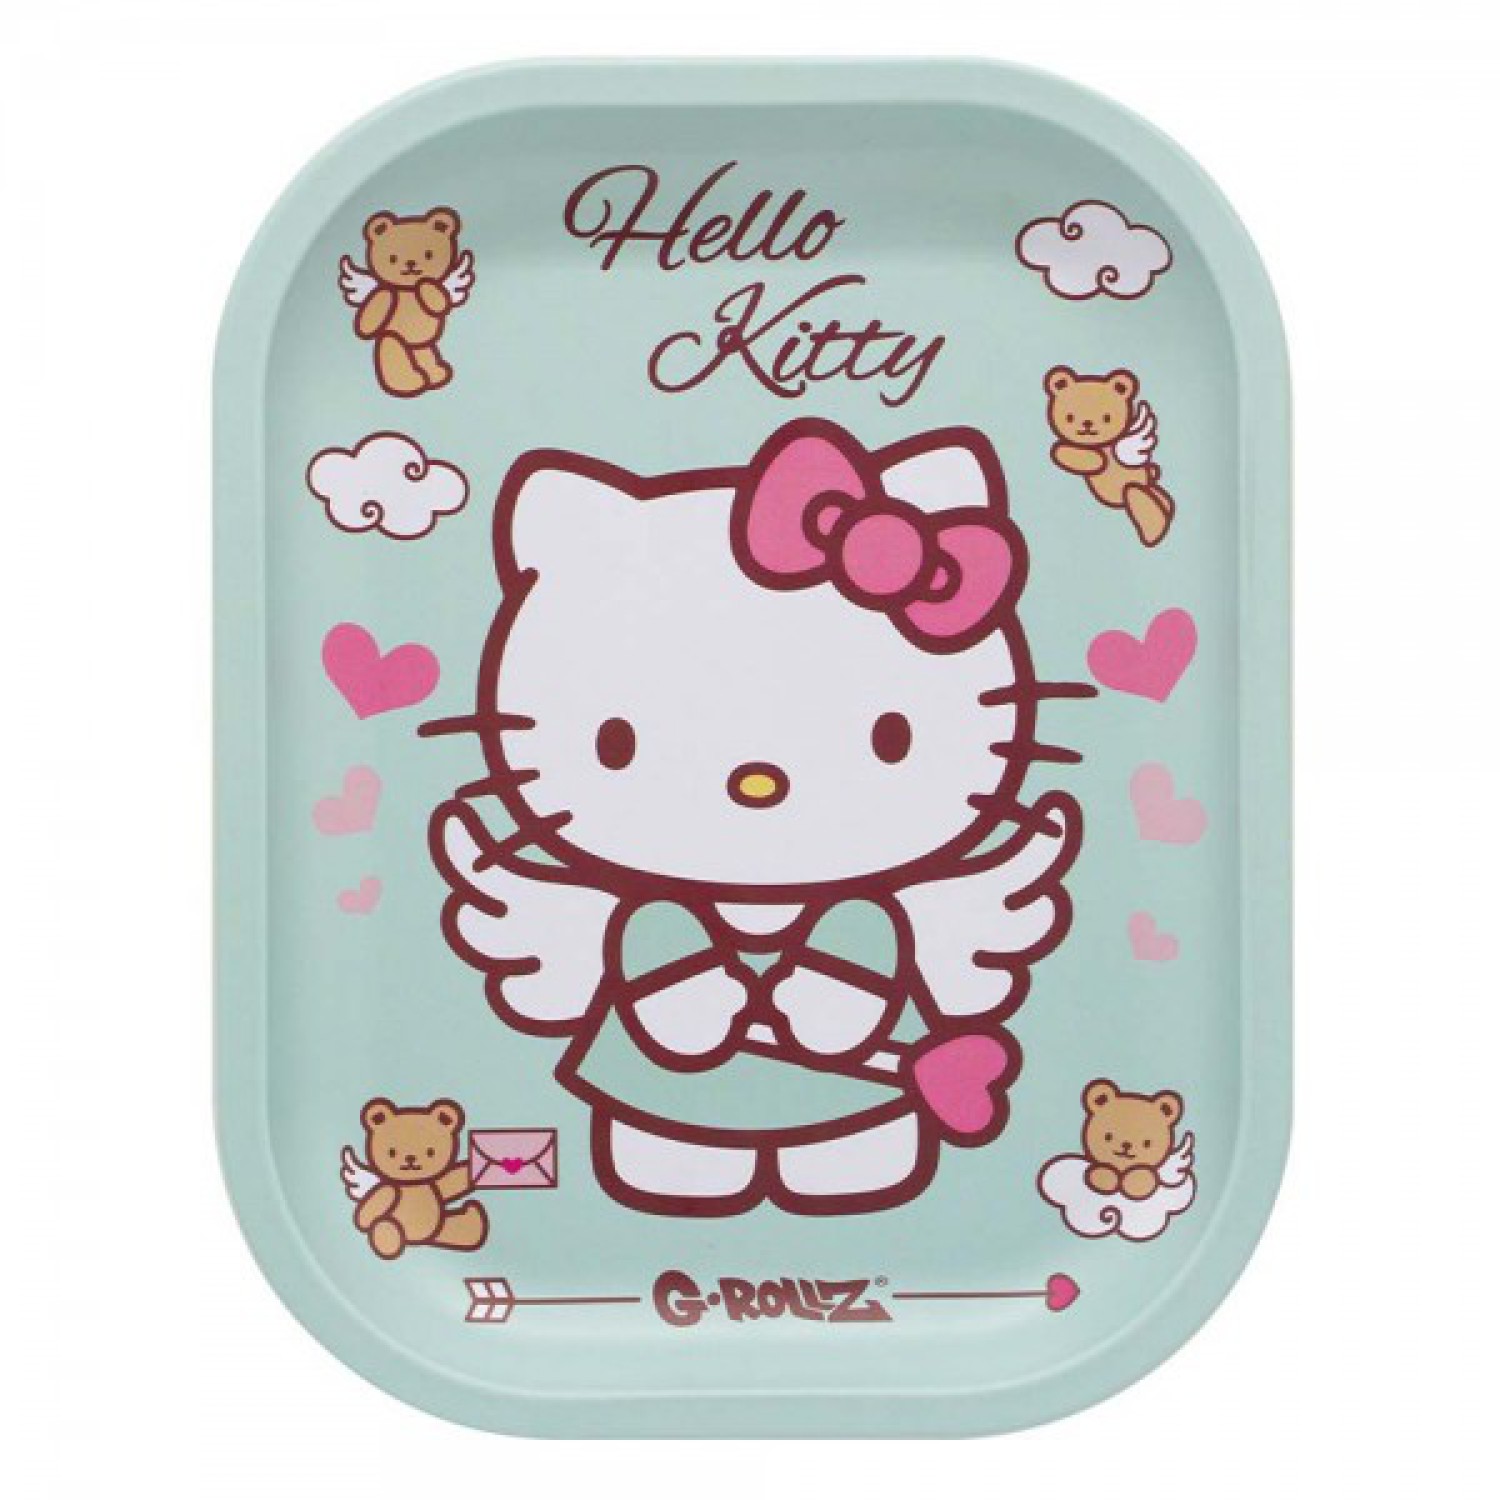 G-ROLLZ Hello Kitty " Cupido Small Kichen " Tray 14x18cm